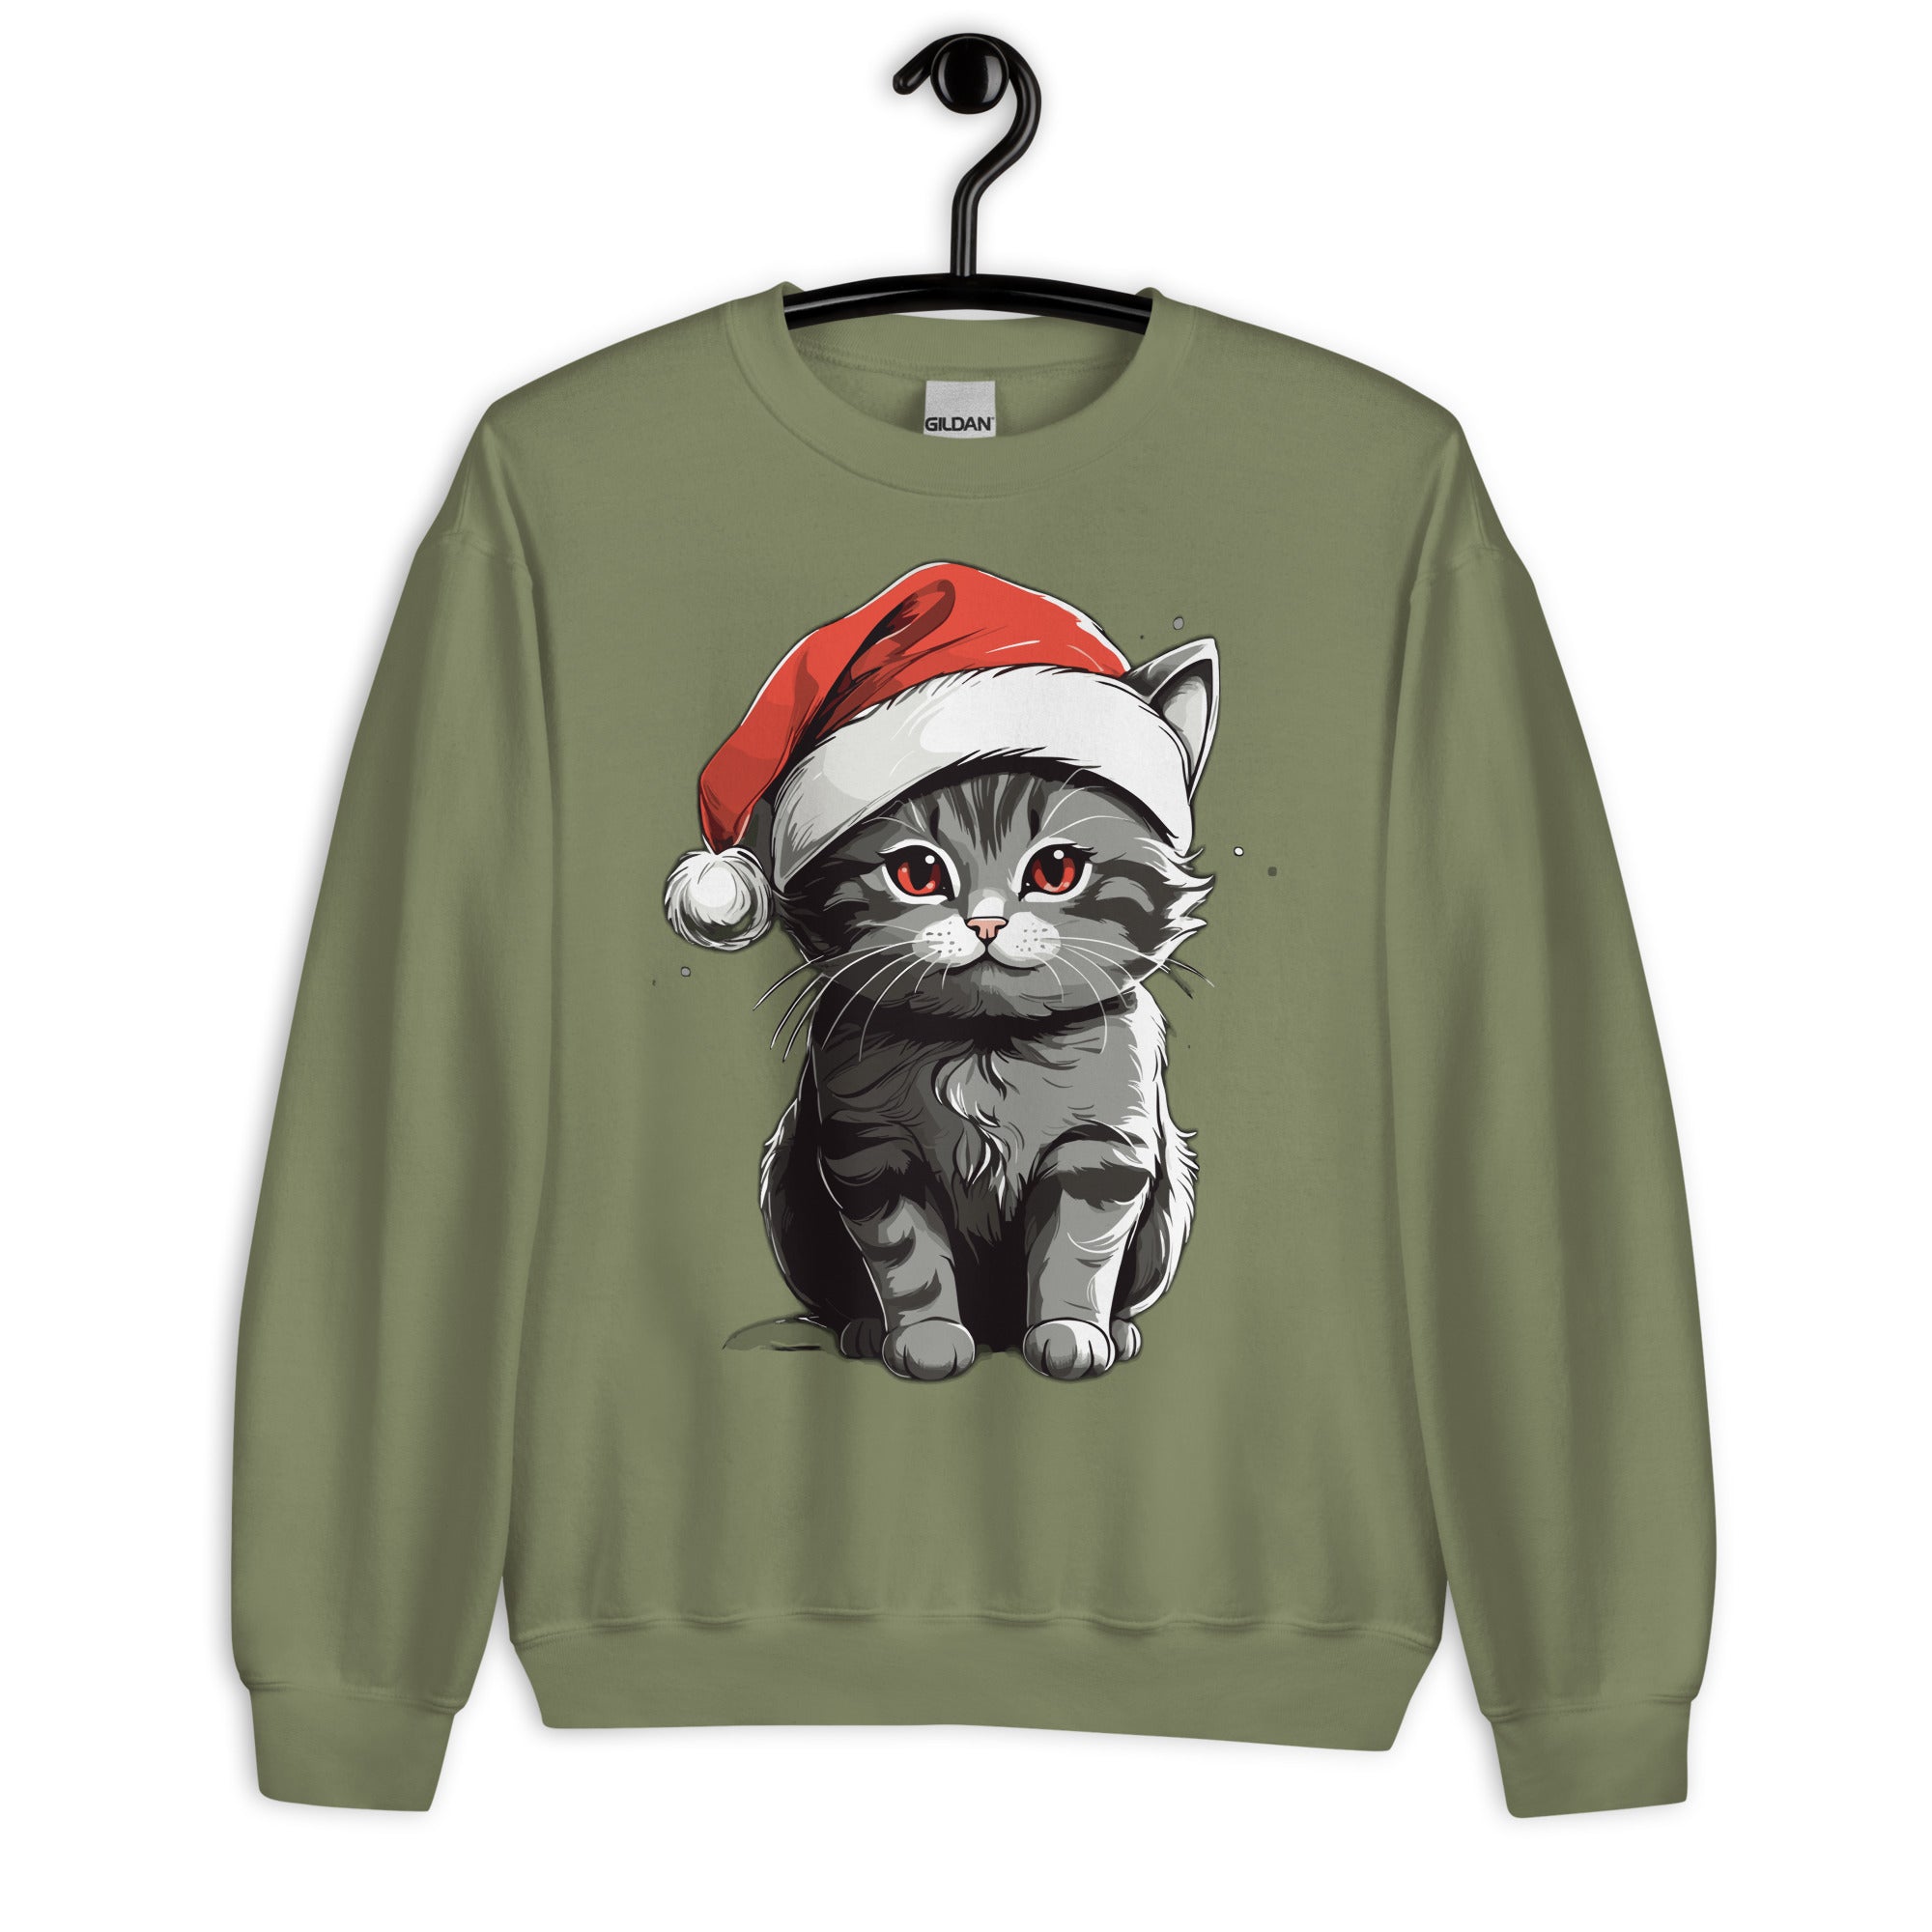 Cute Cat Unisex Sweatshirt